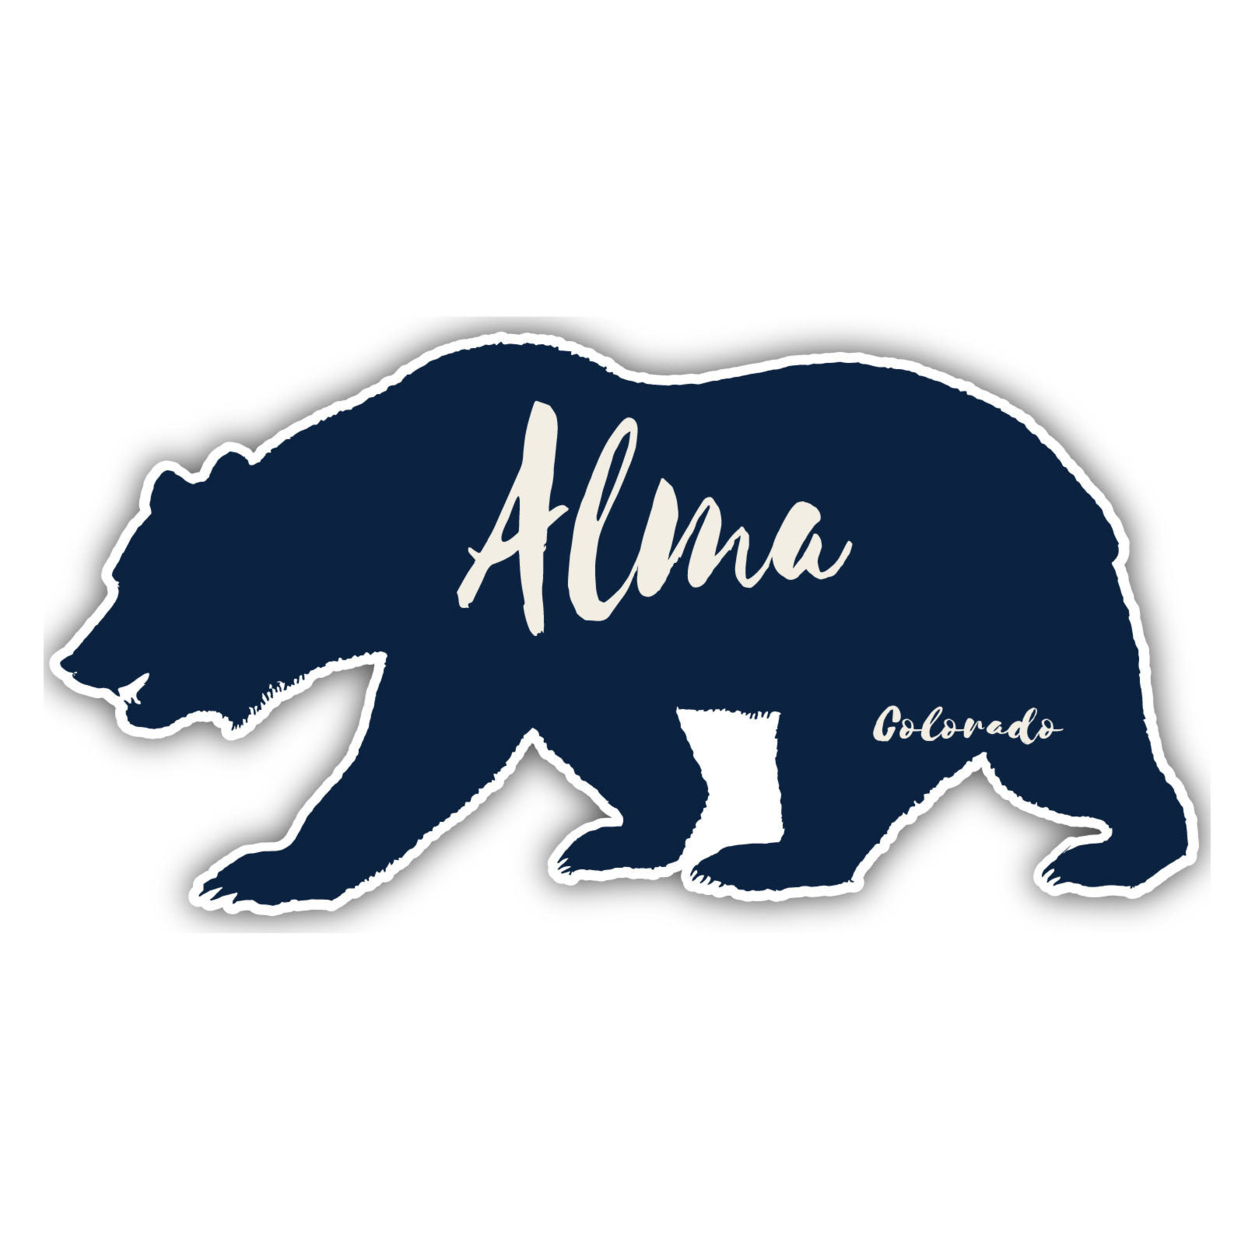 Alma Colorado Souvenir Decorative Stickers (Choose Theme And Size) - Single Unit, 4-Inch, Adventures Awaits